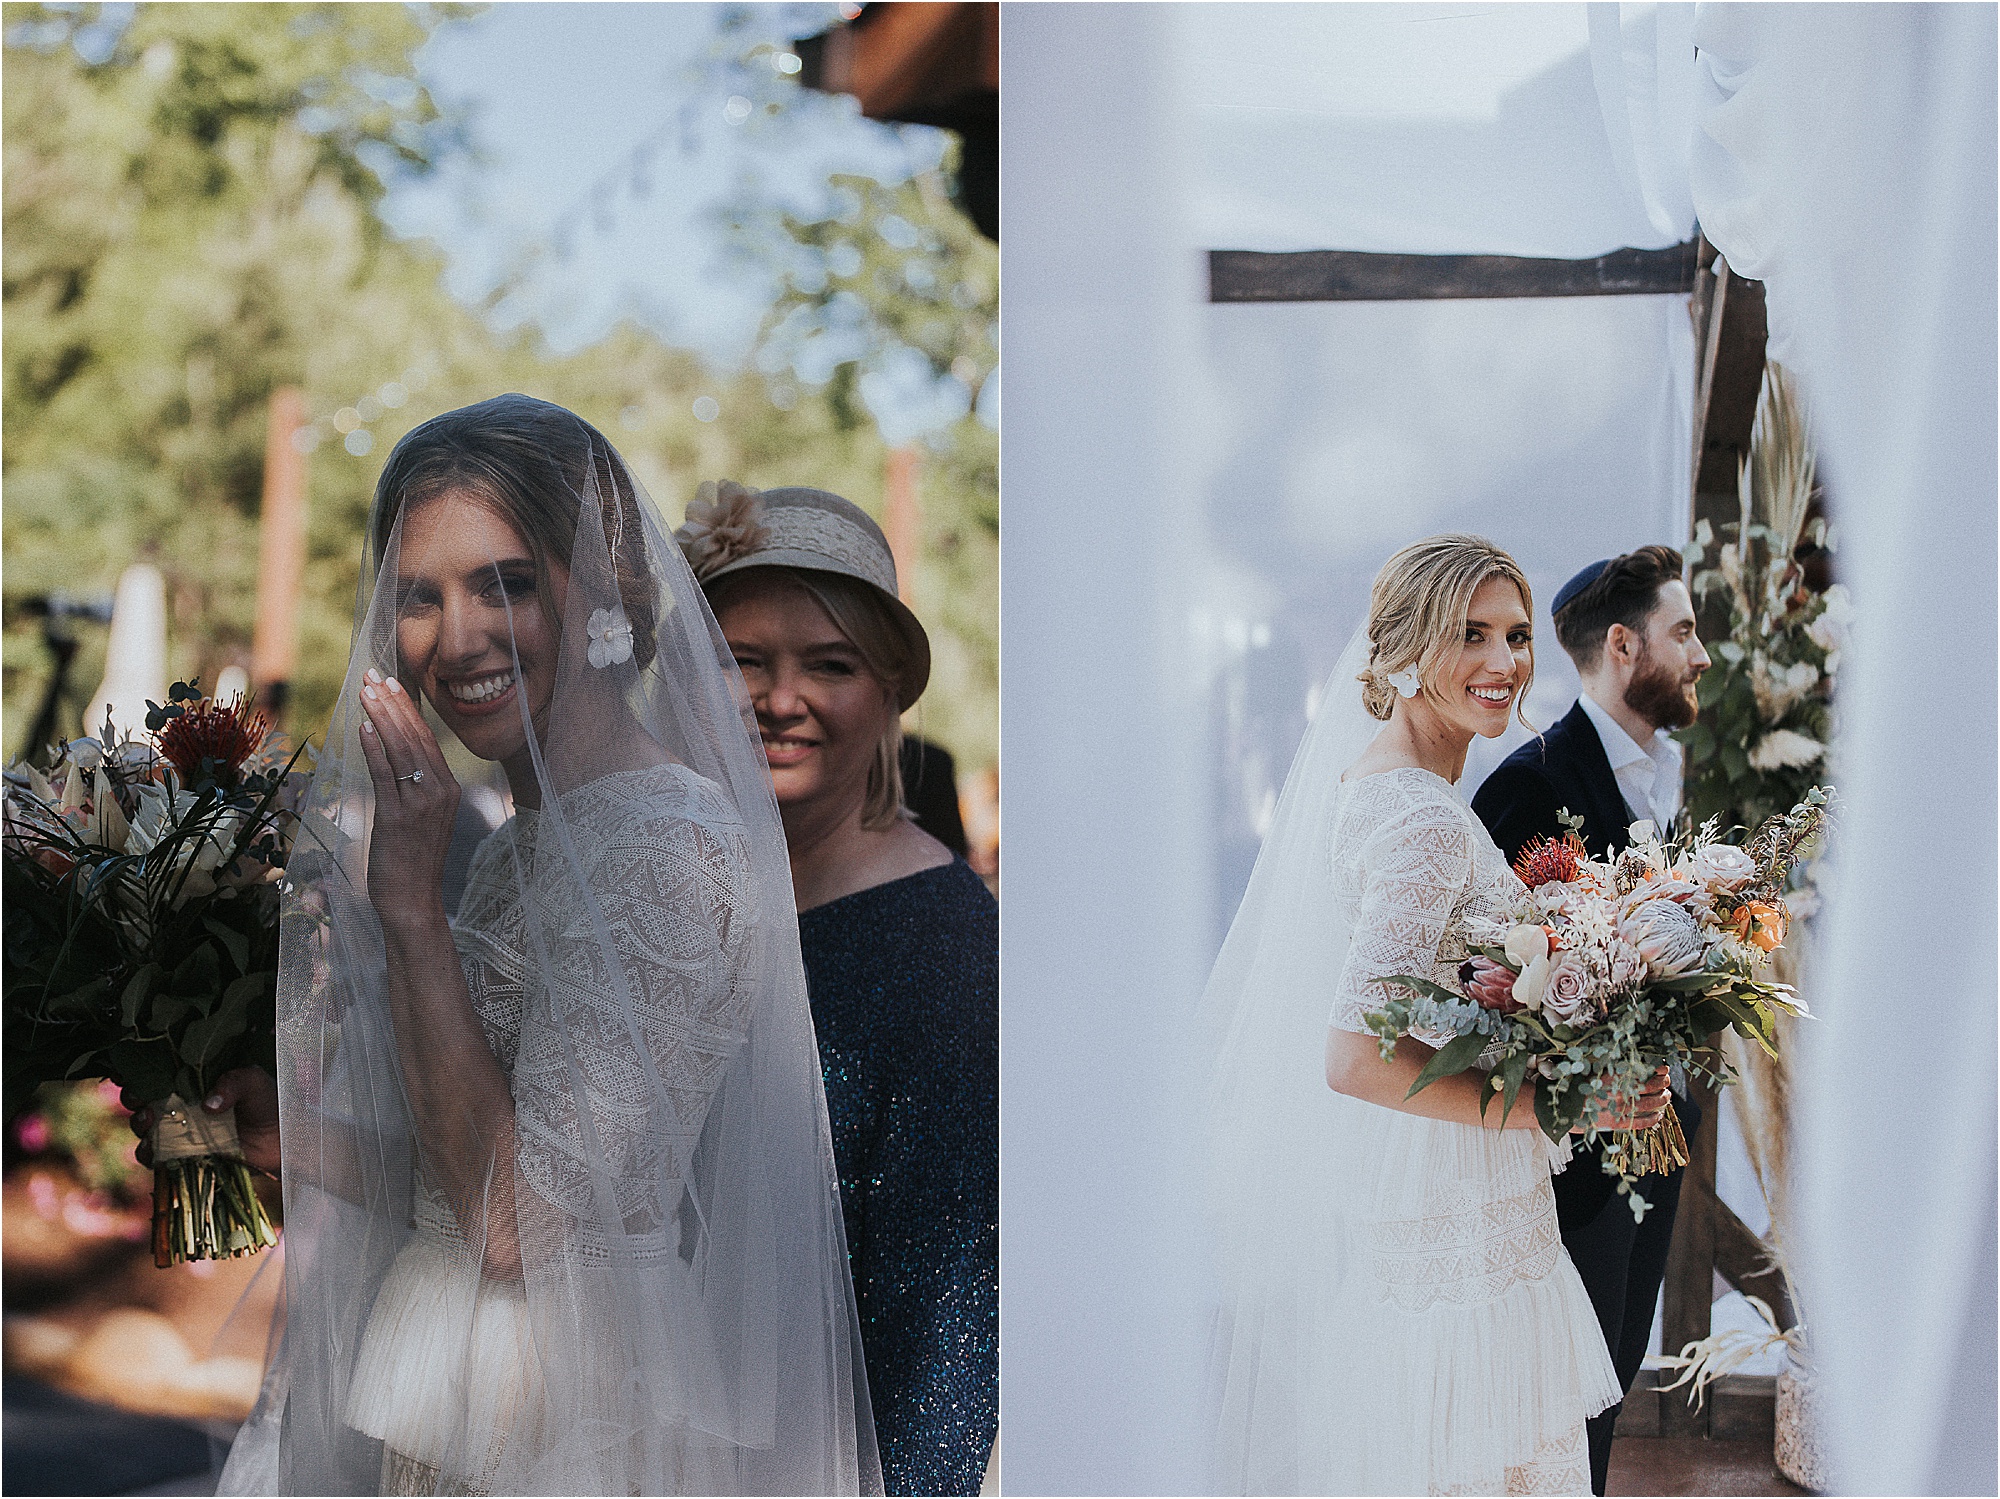 Joyful Jewish Wedding Overlooking The Great Outdoors